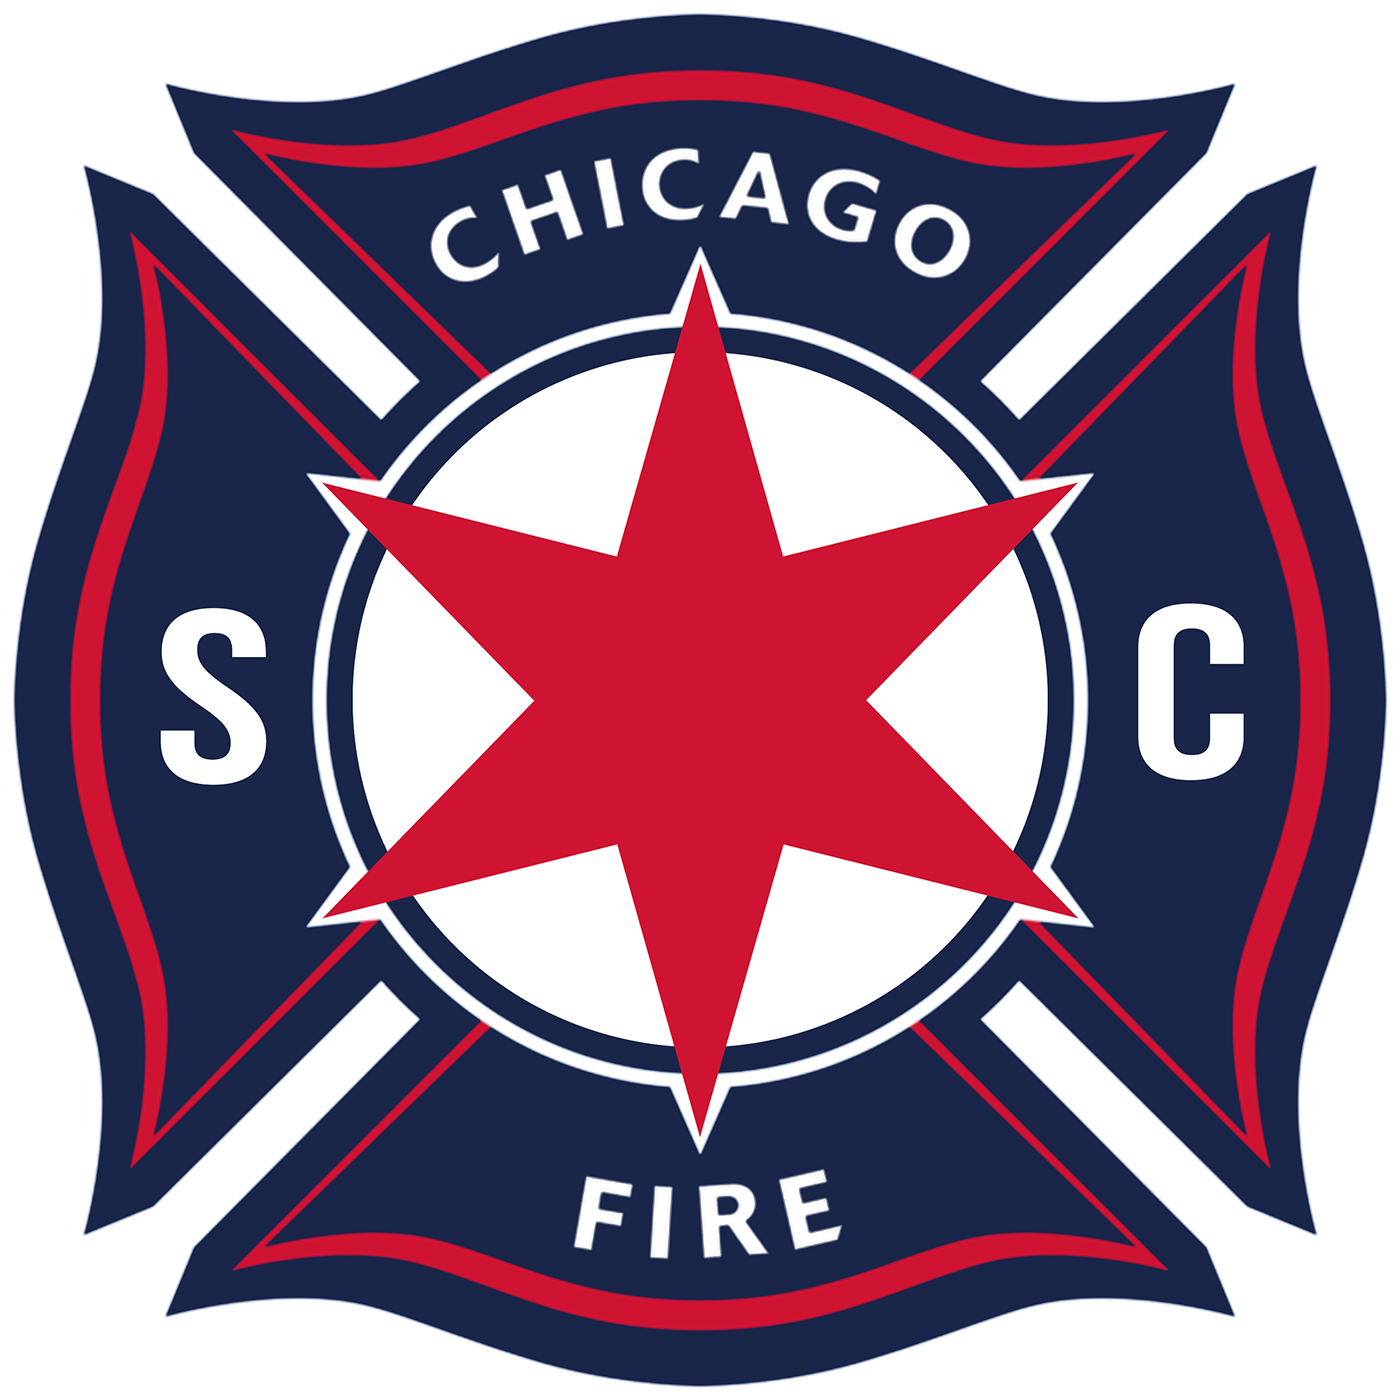 Chicago Fire Soccer Logo - Chicago Fire Redesign